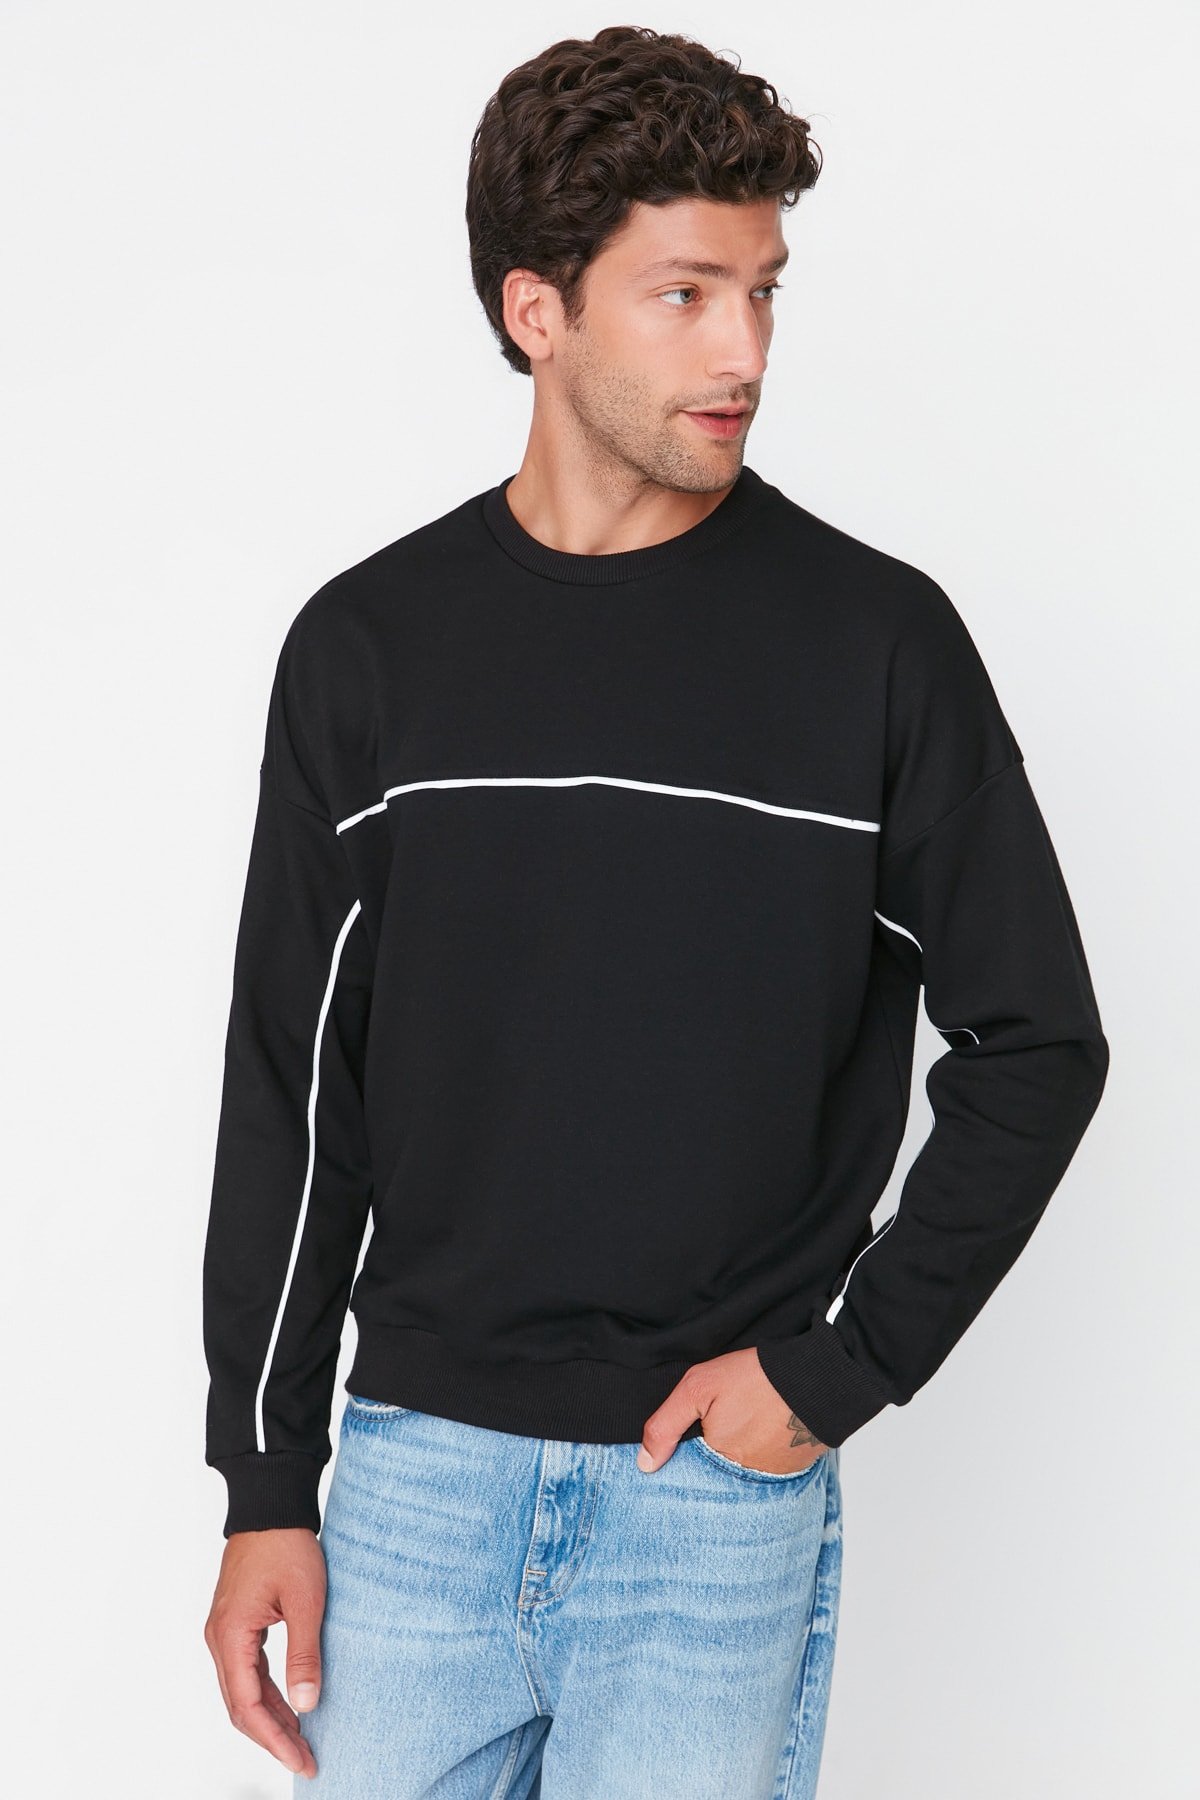 Trendyol Men's Oversize/Wide Cut Long Sleeve Crew Neck Piping 1 Cotton Sweatshirt